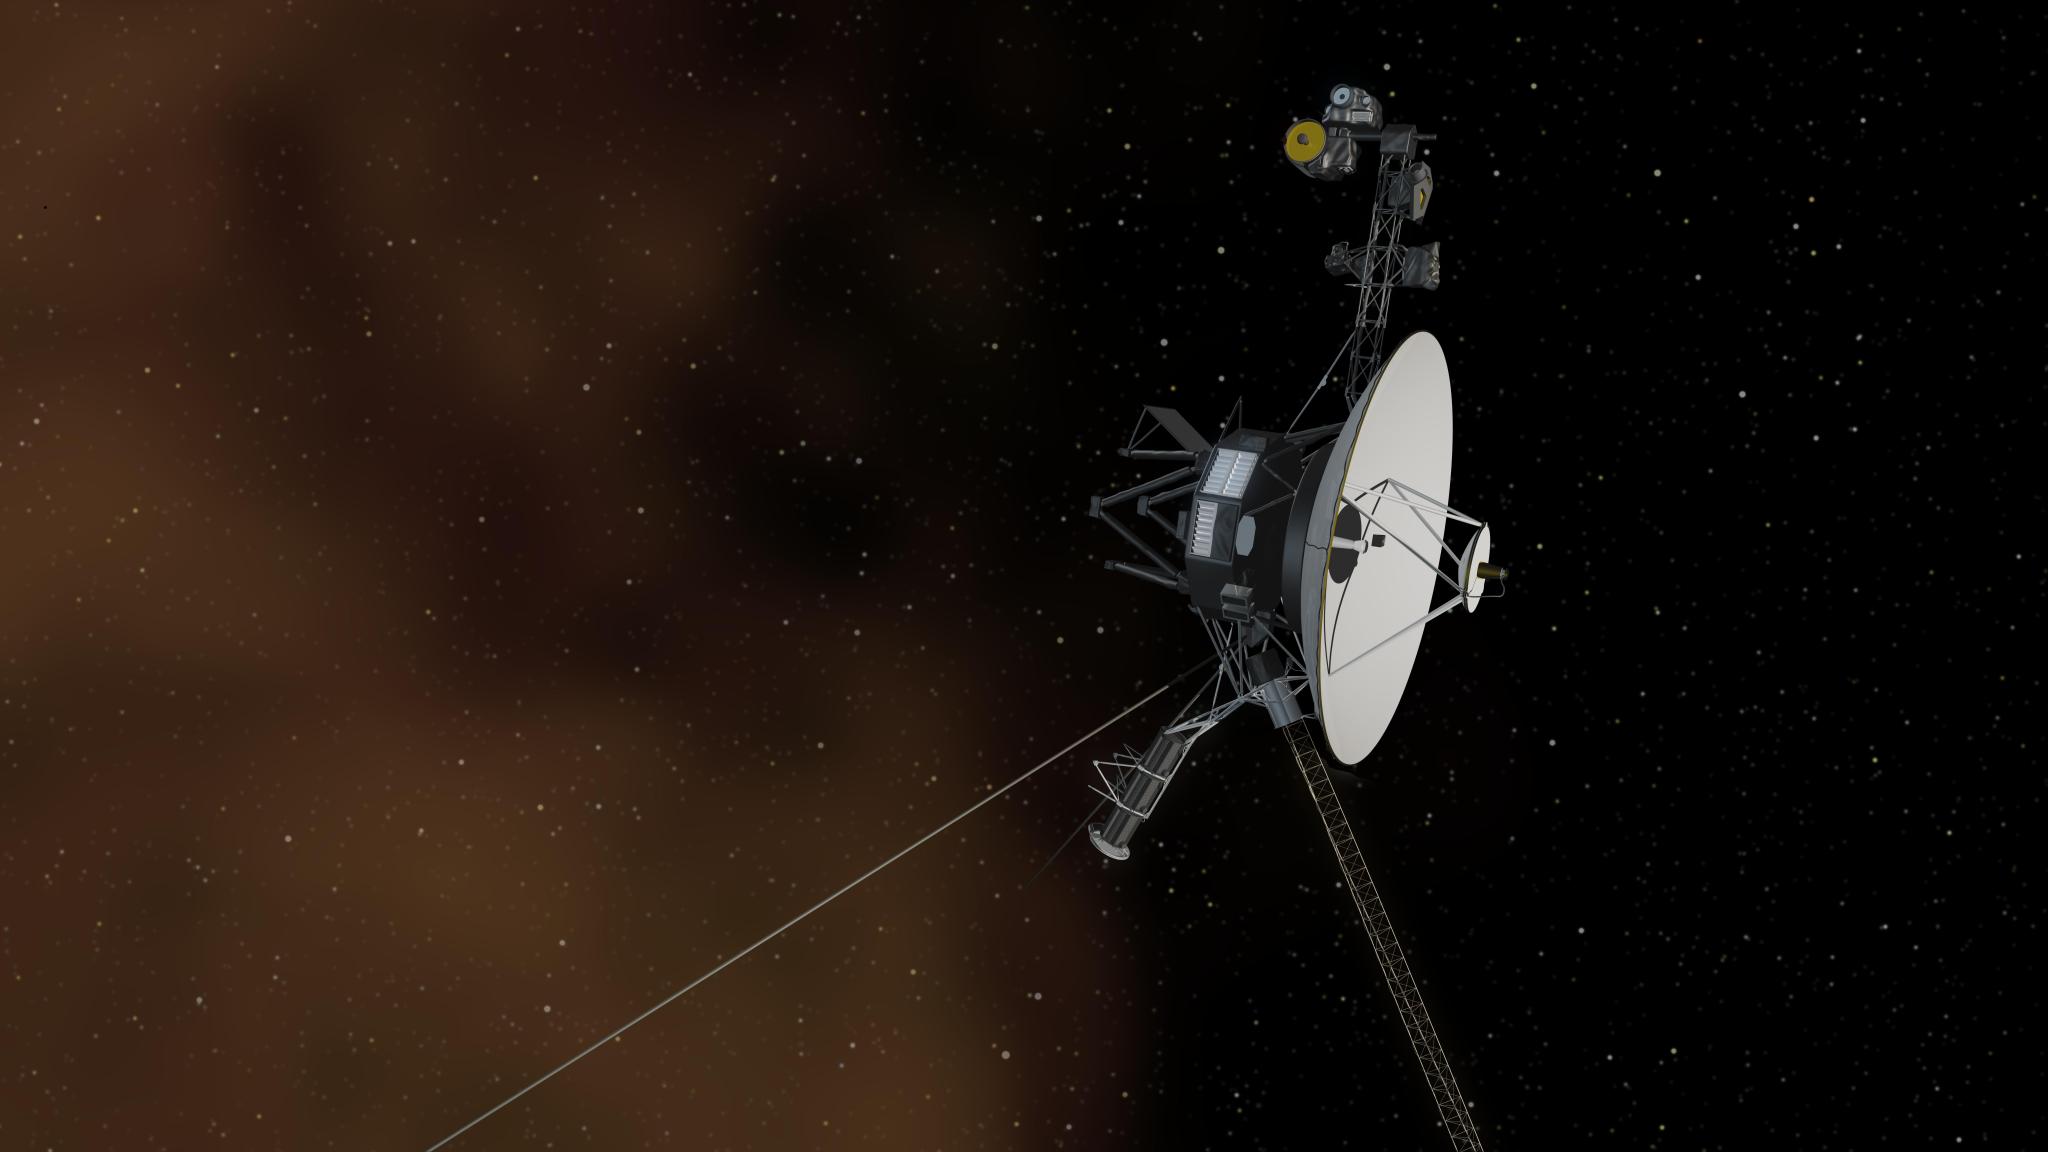 Artist rendering of Voyager